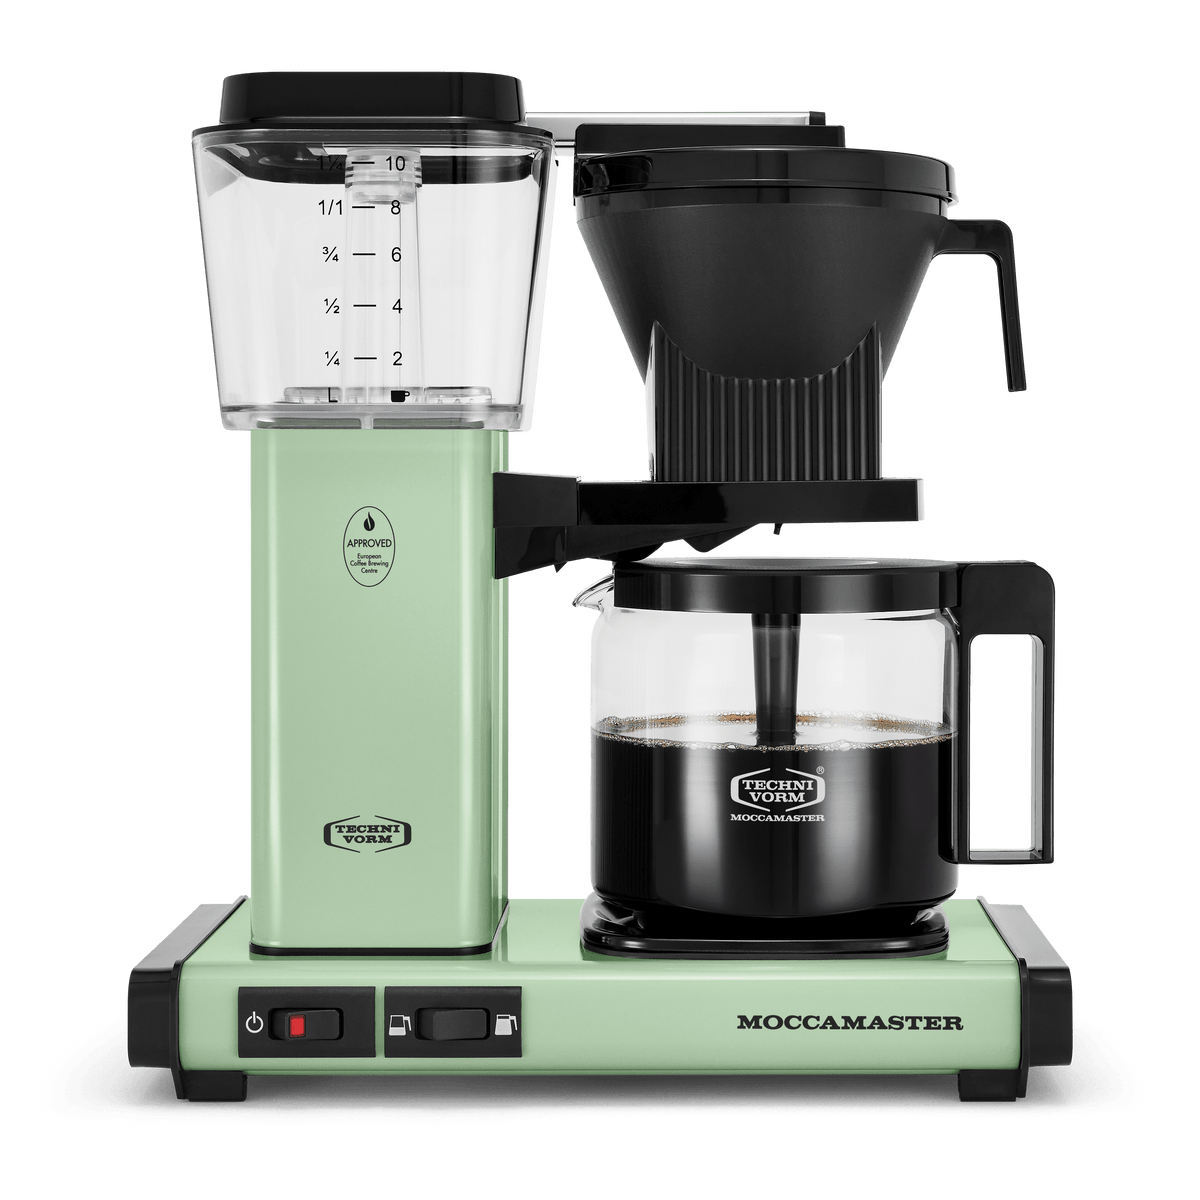 Moccamaster Machine: Automatic Moccamaster Coffee KBGV - Coffee USA Maker Select